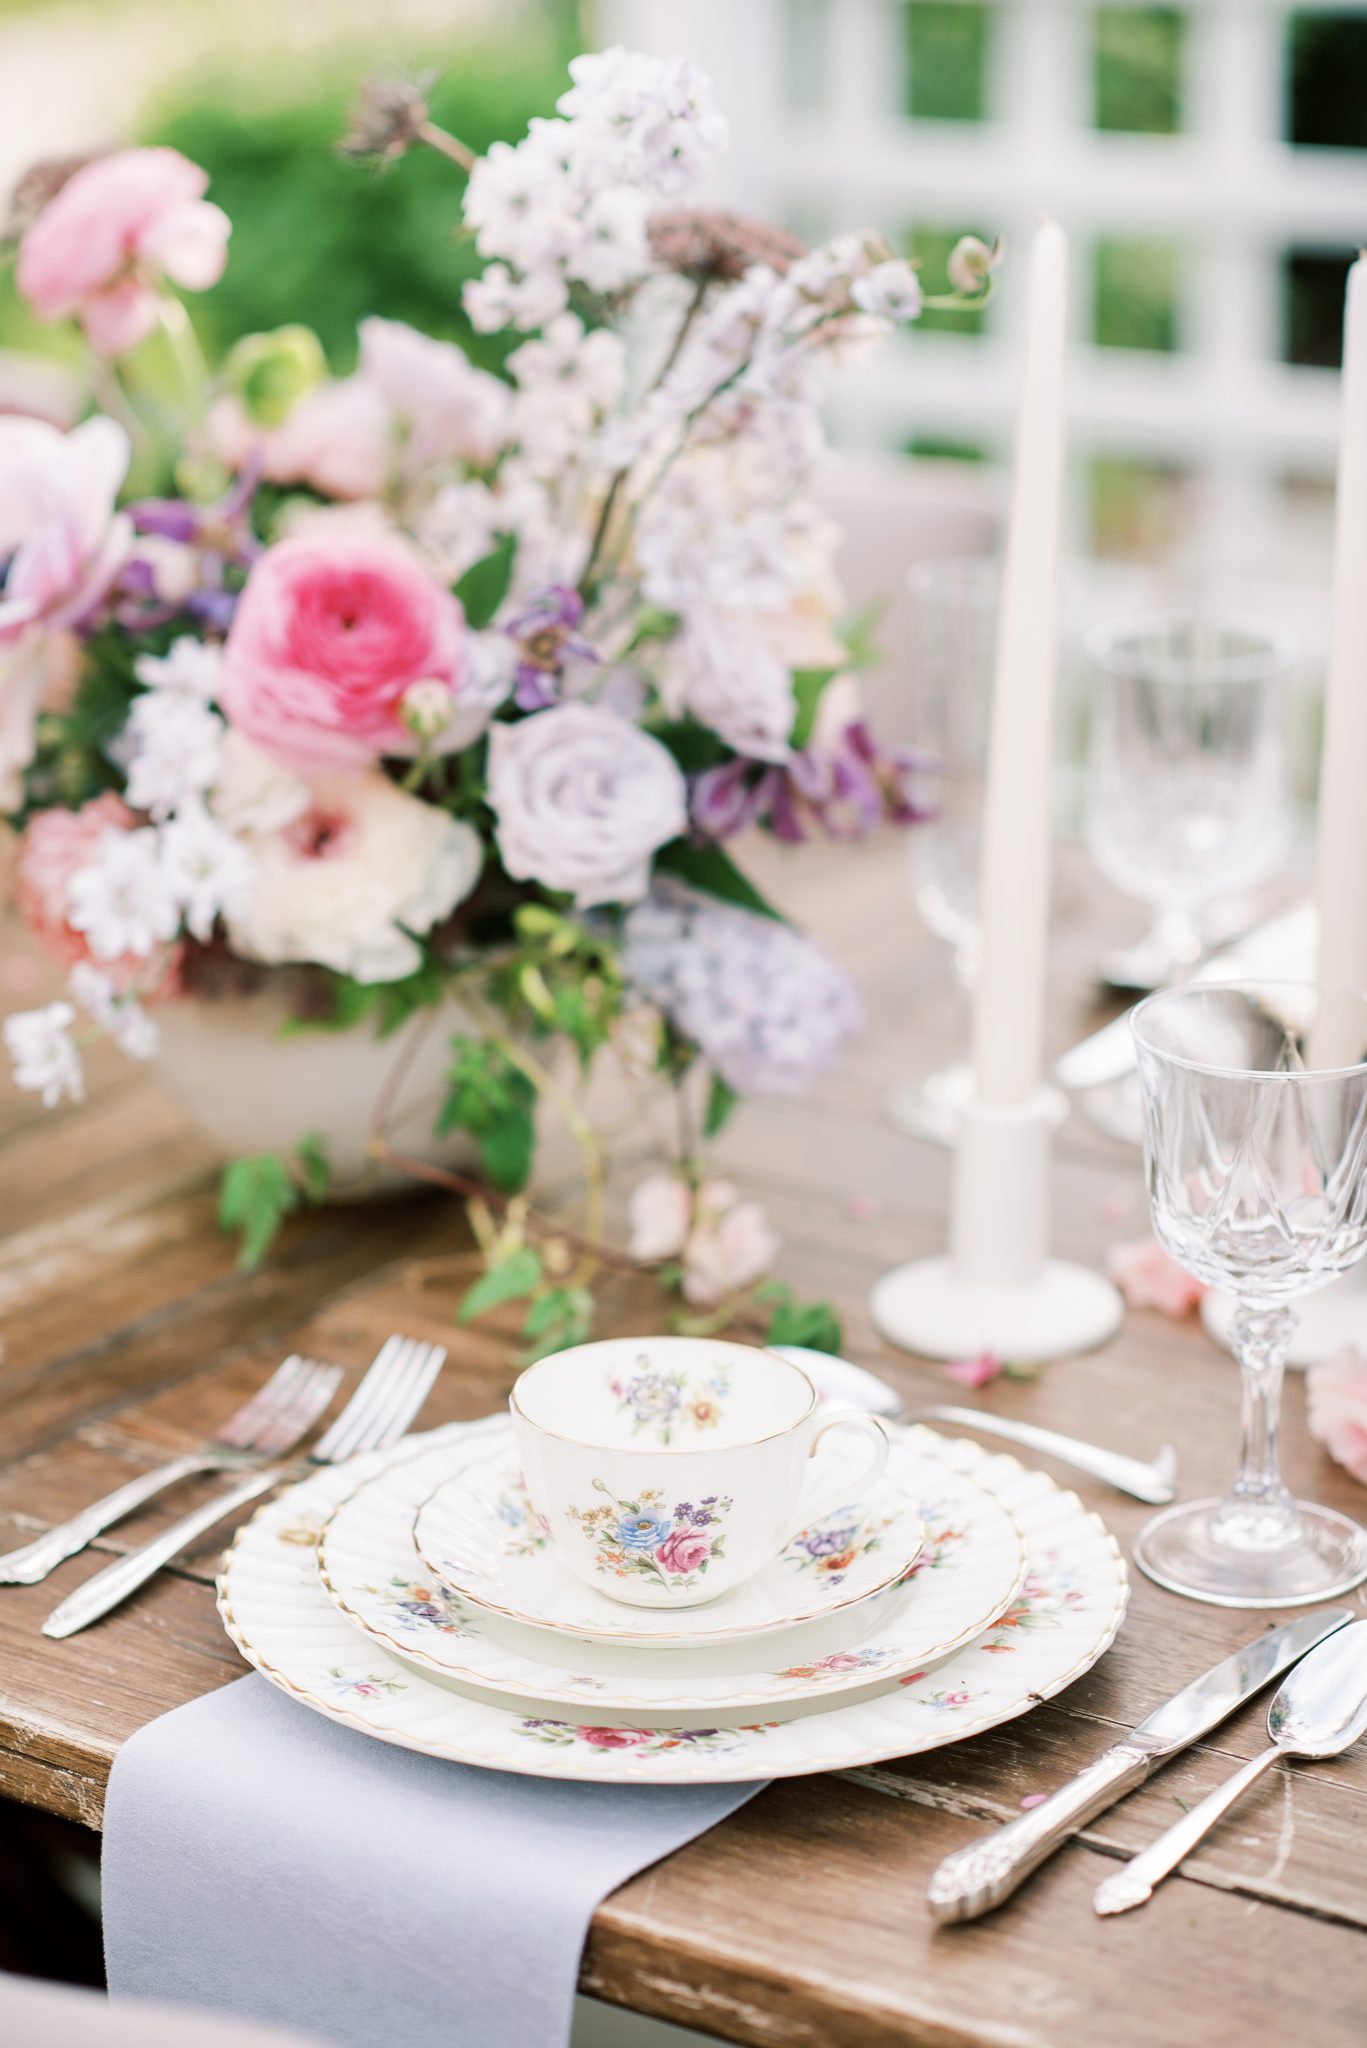 Gardenesque Tablescape in the Deane House Garden - wedding inspiration featured on Bronte Bride